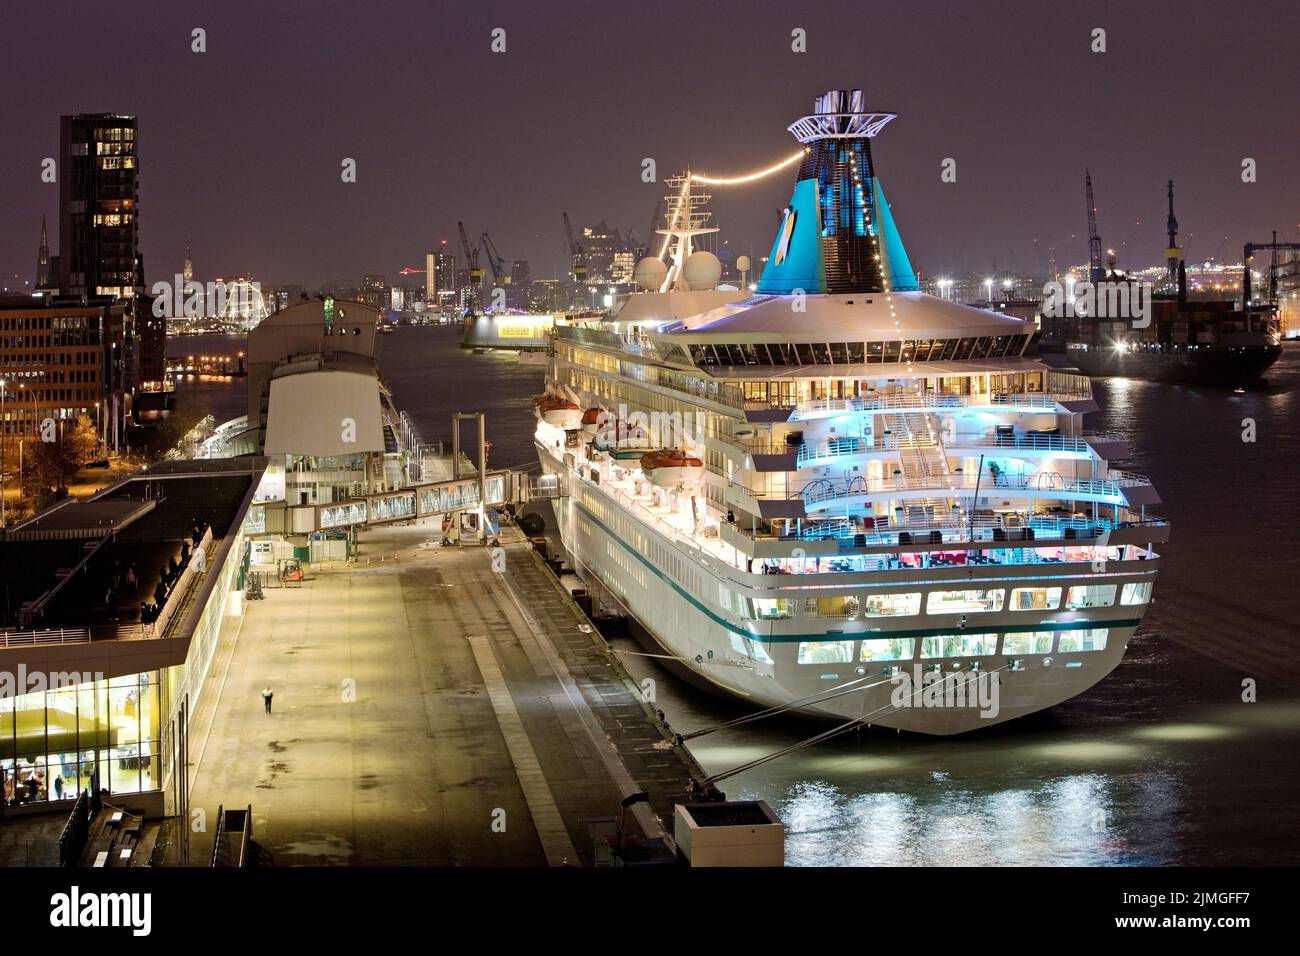 Hamburg Cruise Center Altona con el crucero Artania por la noche, Hamburgo, Alemania, Europa Foto de stock